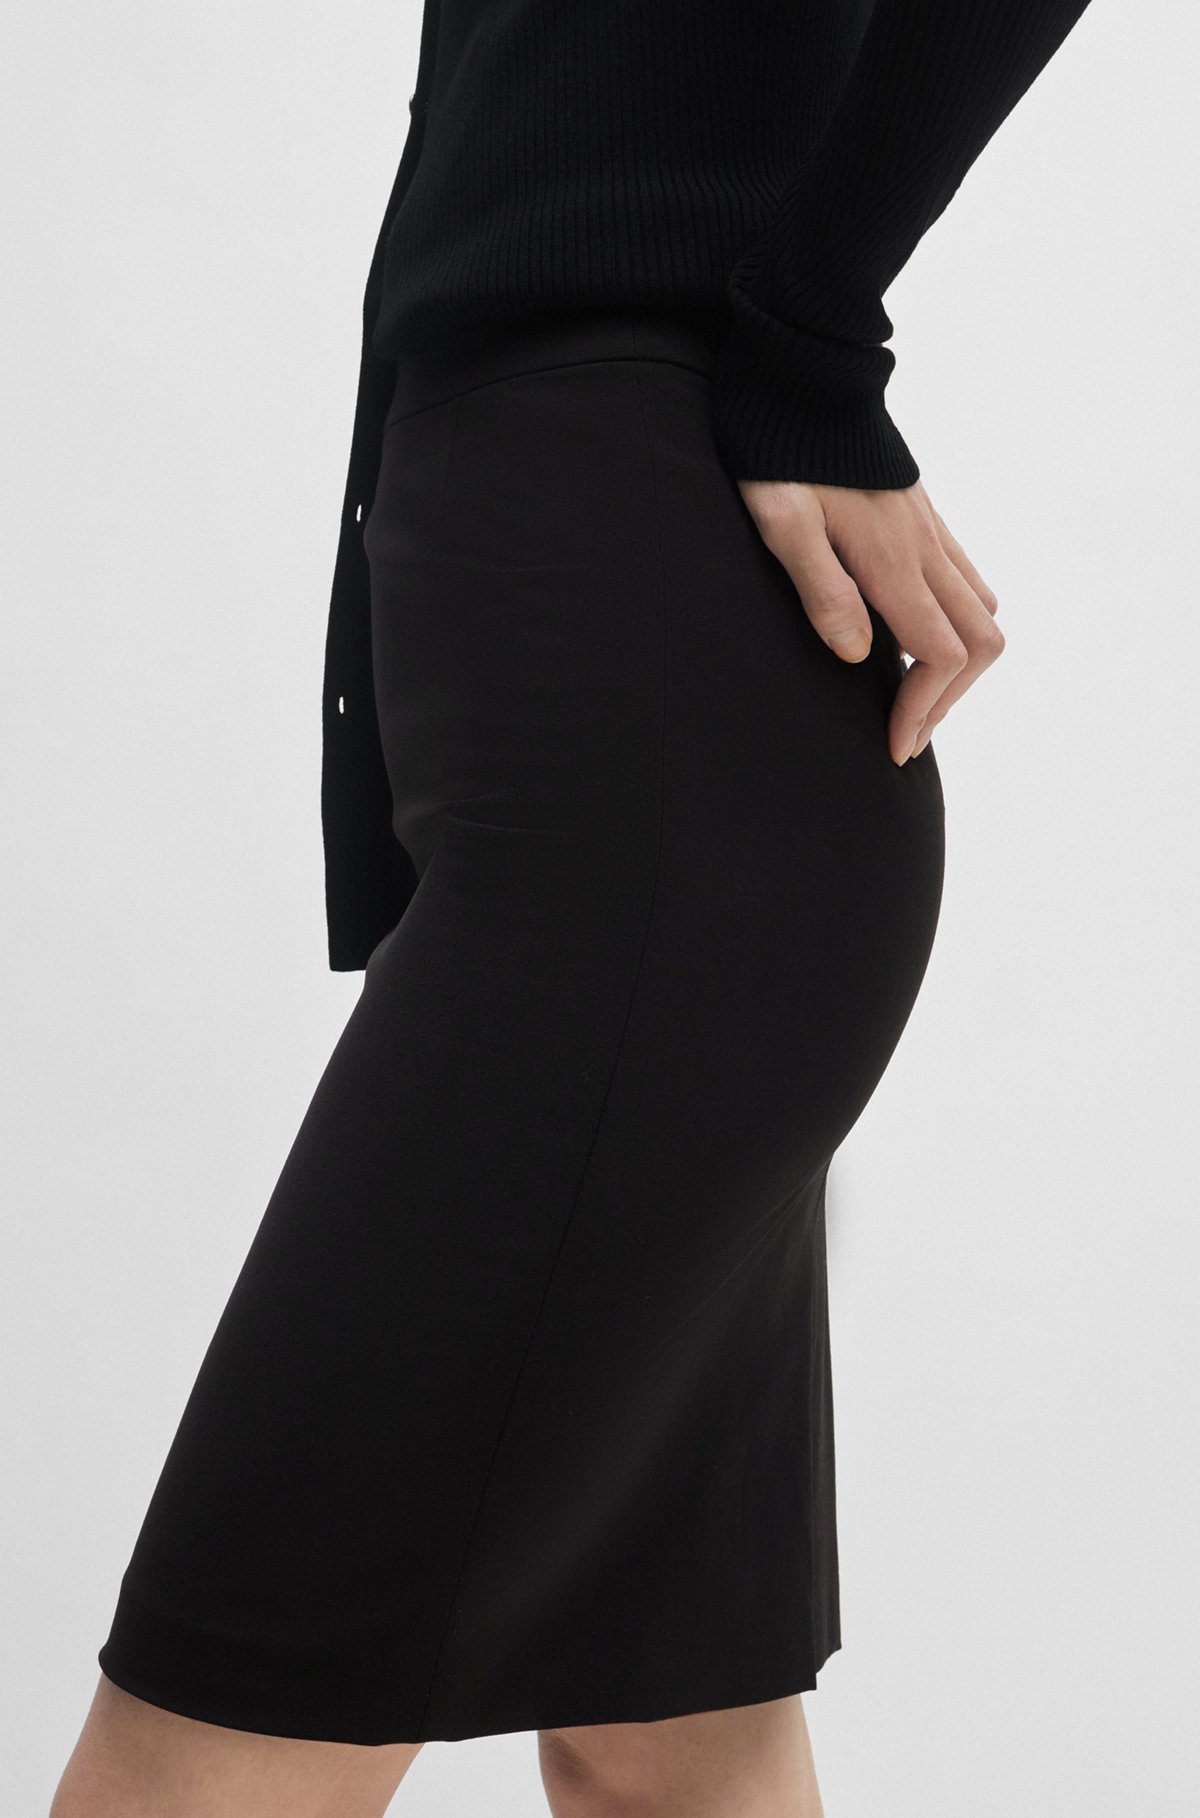 Pencil skirt in Italian stretch virgin wool, Black